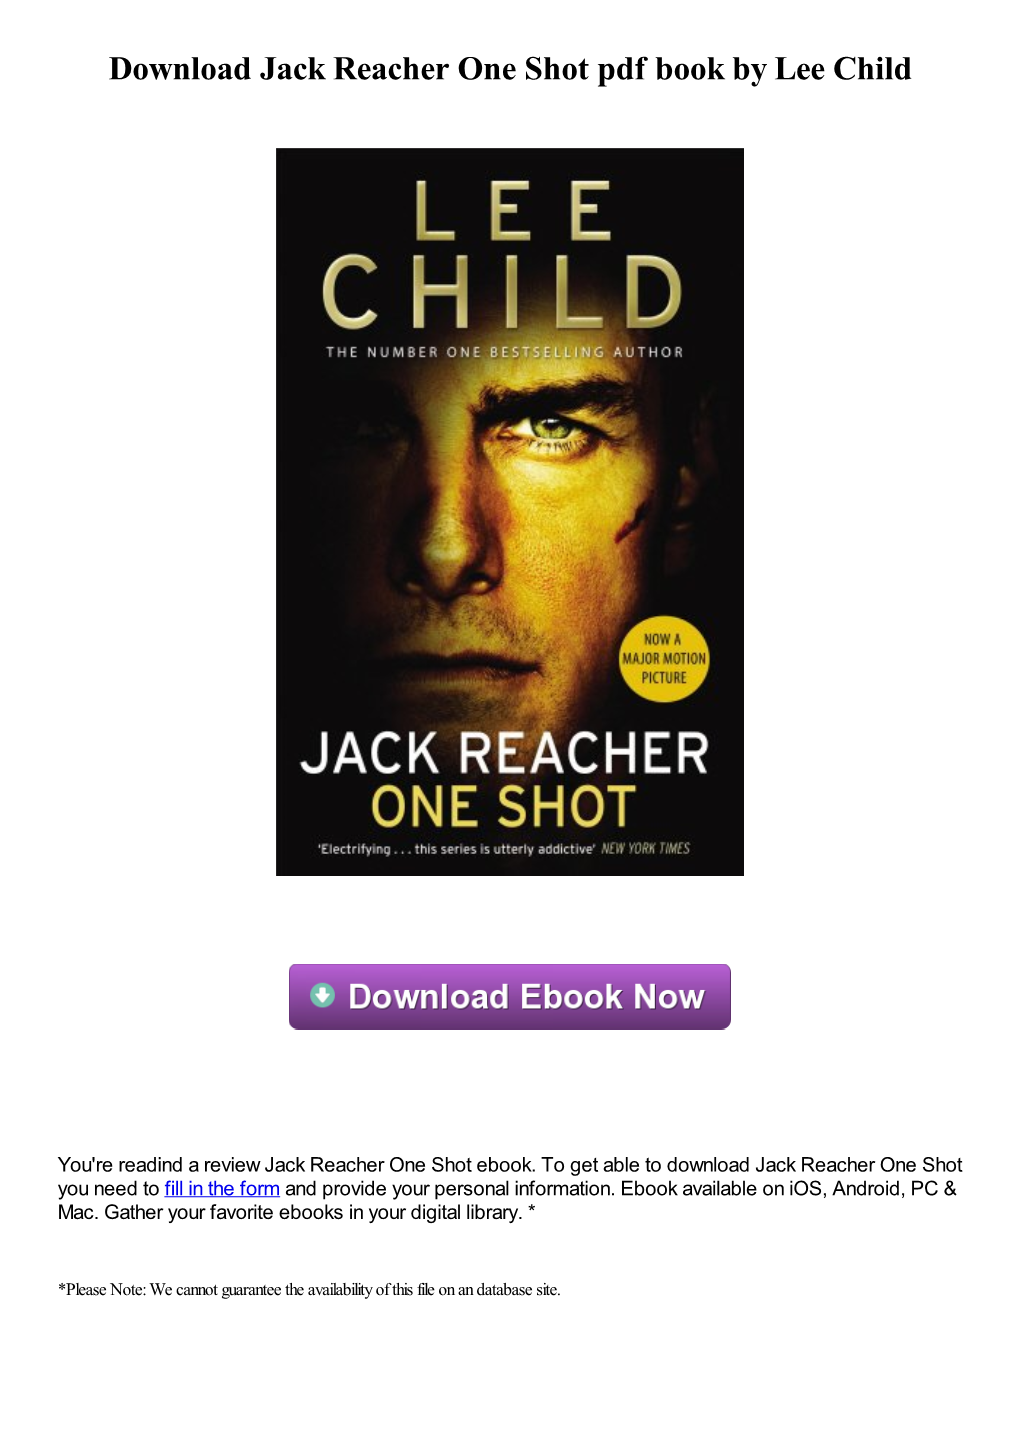 Download Jack Reacher One Shot Pdf Book by Lee Child